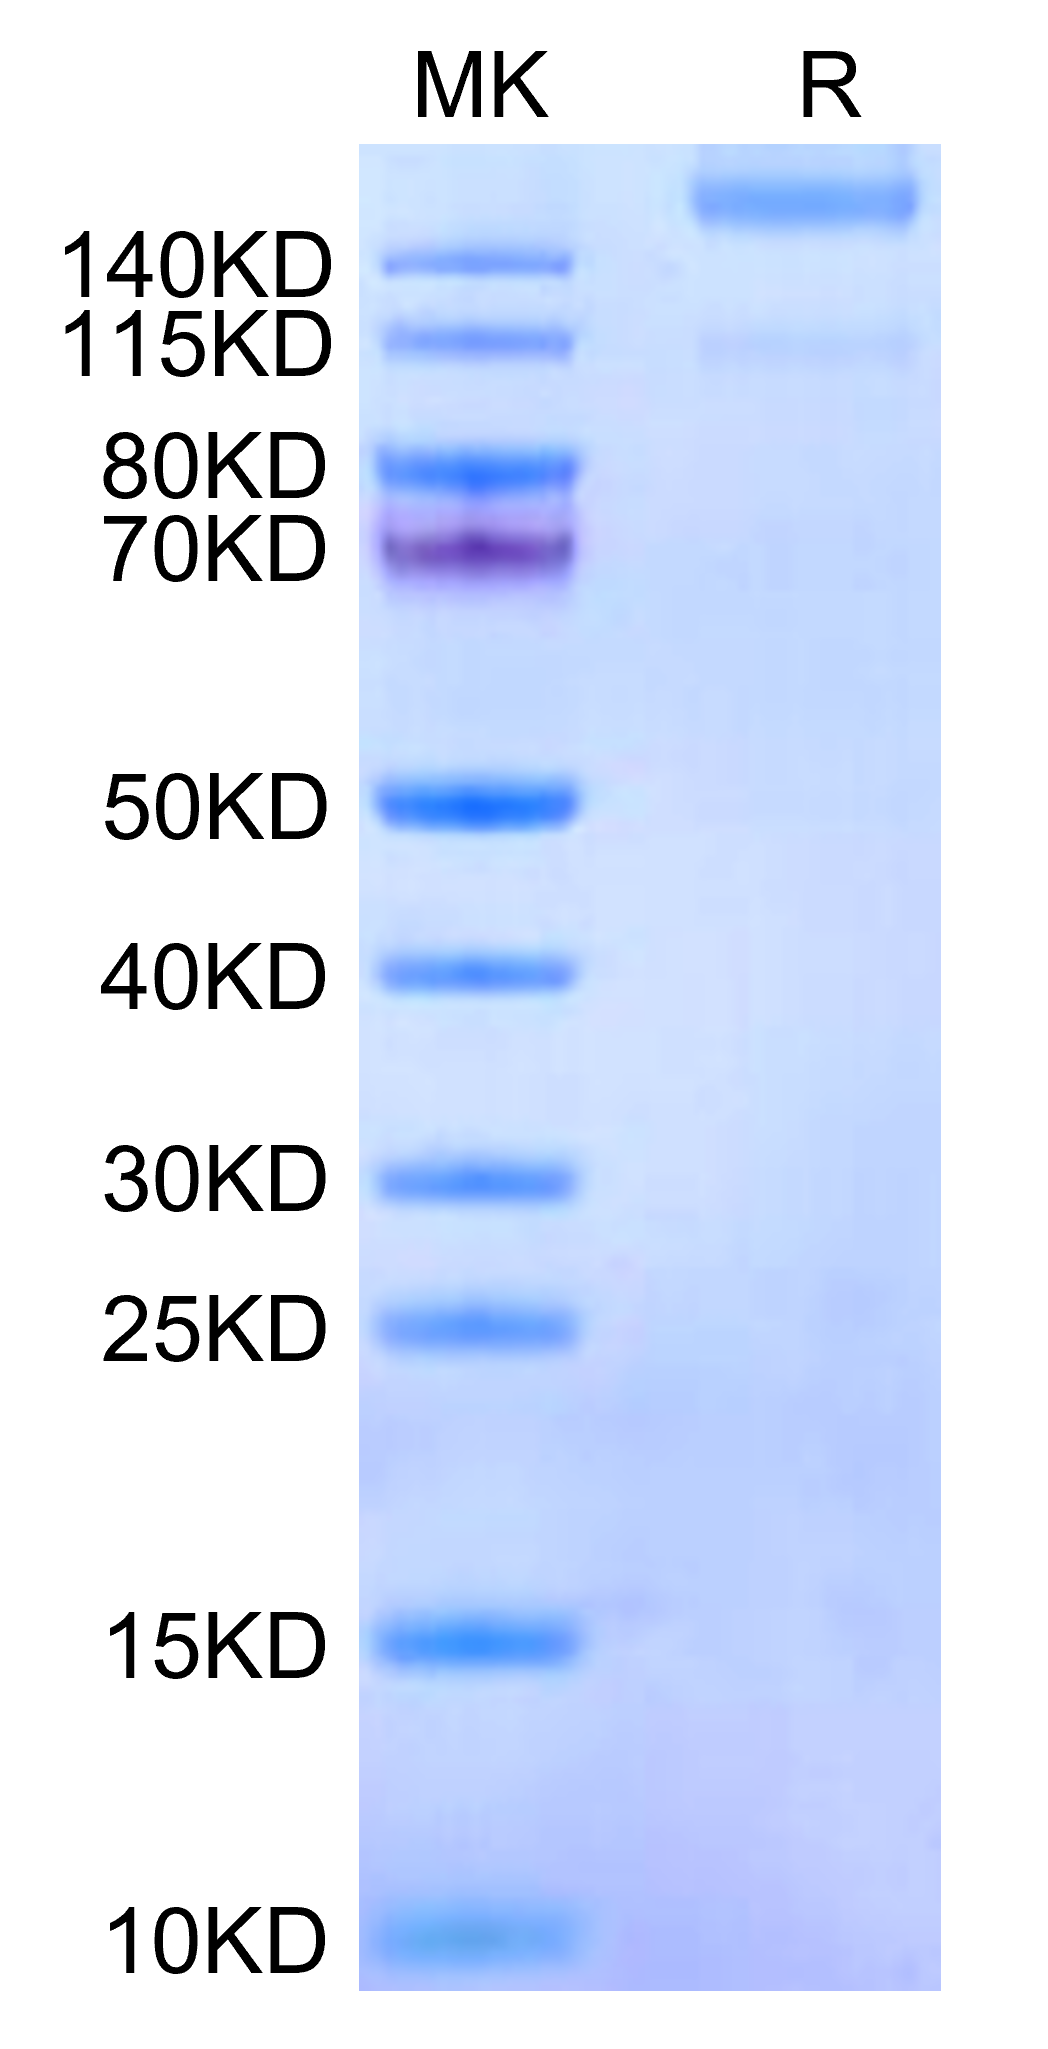 Human Integrin alpha A1 beta 1 (ITGA1&ITGB1) Heterodimer Protein (LTP10165)